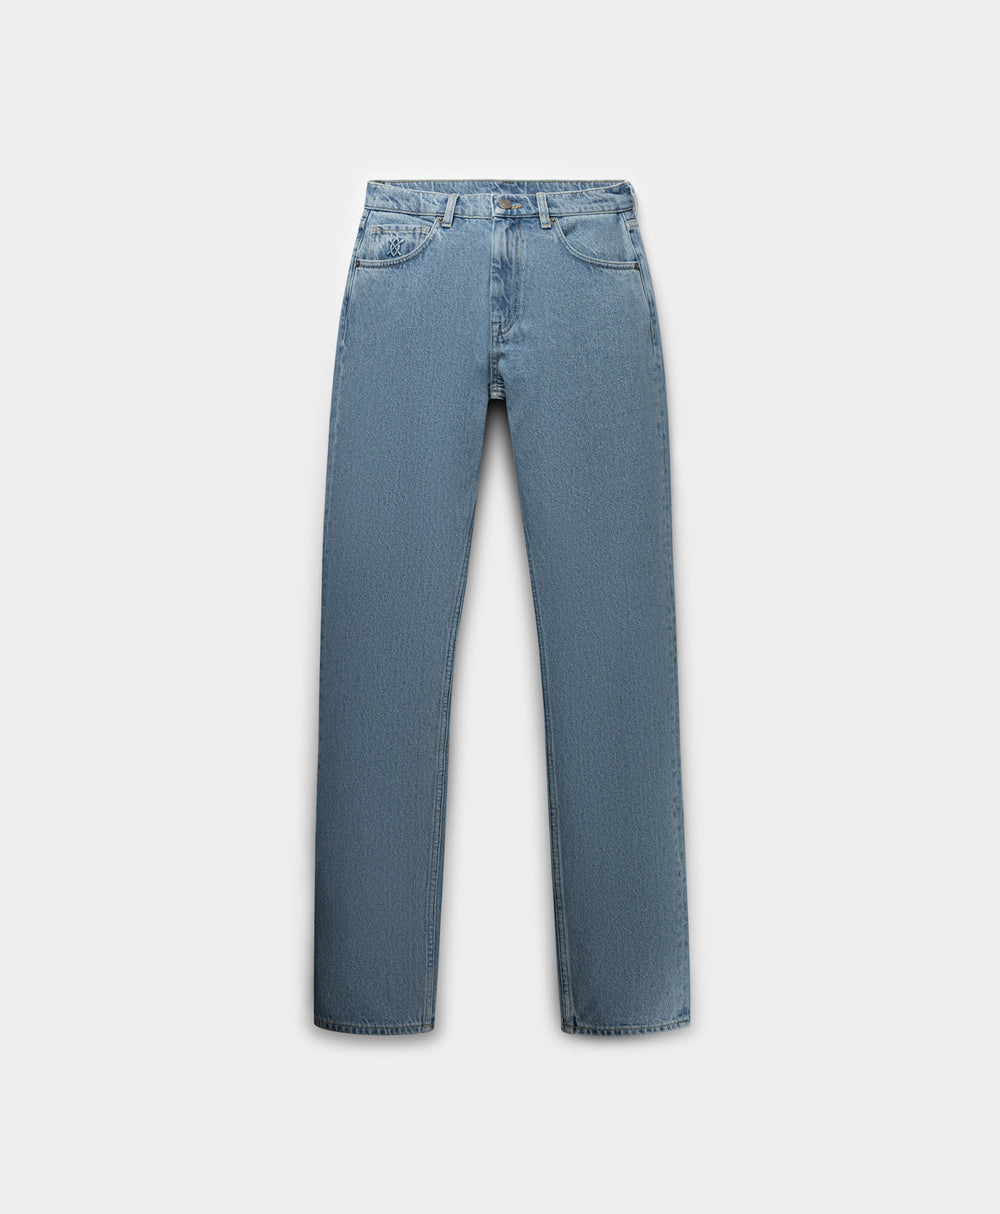 DP - Light Blue Ayachi Jeans - Packshot - Front